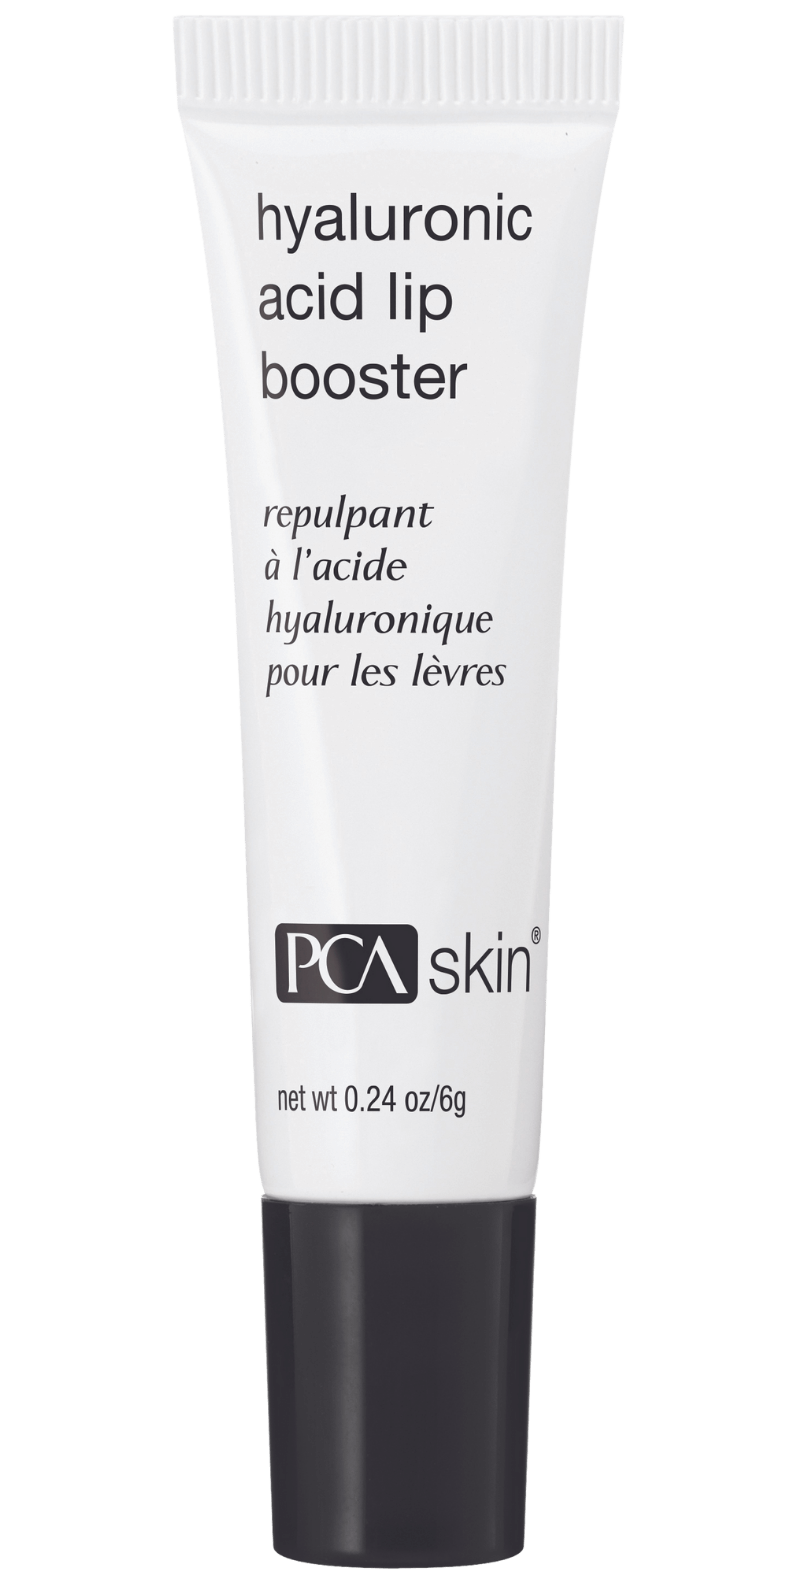 's PCA Skin Hyaluronic Acid Lip Booster - Bellini's Skin and Parfumerie 